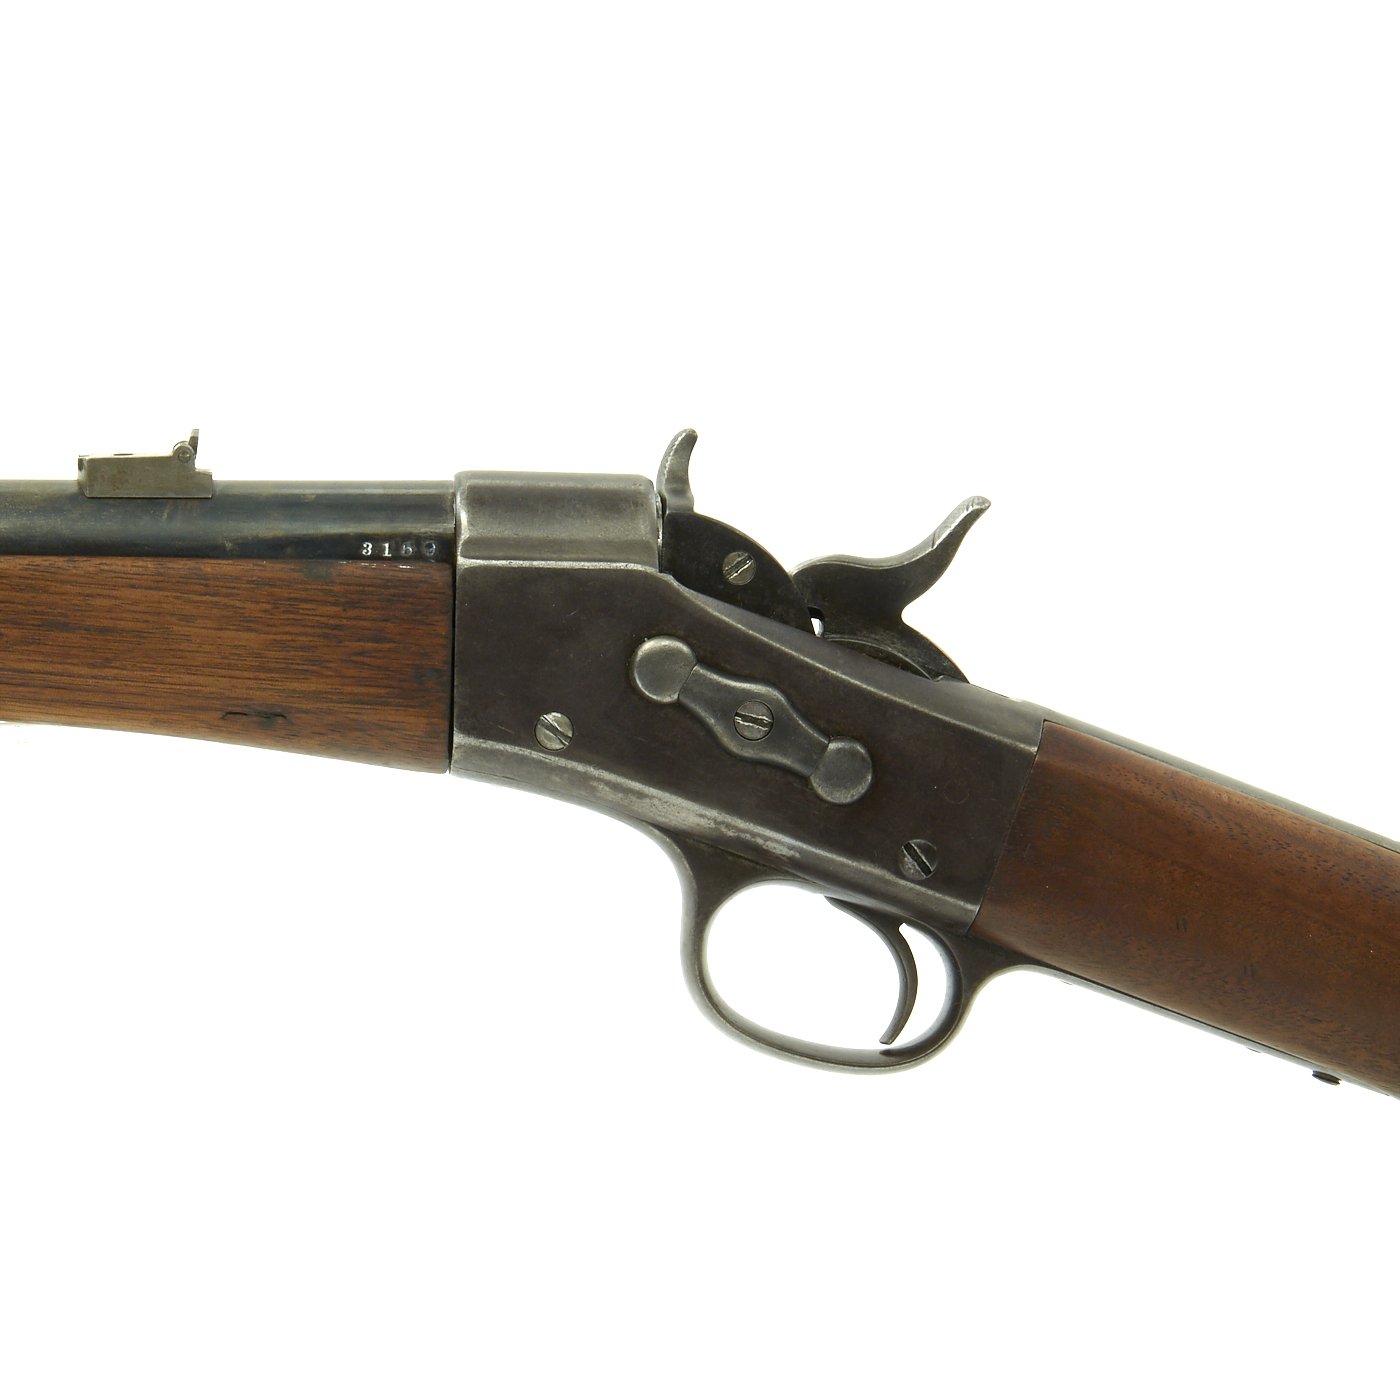 50 Remington Navy* Reformed Brass Cases